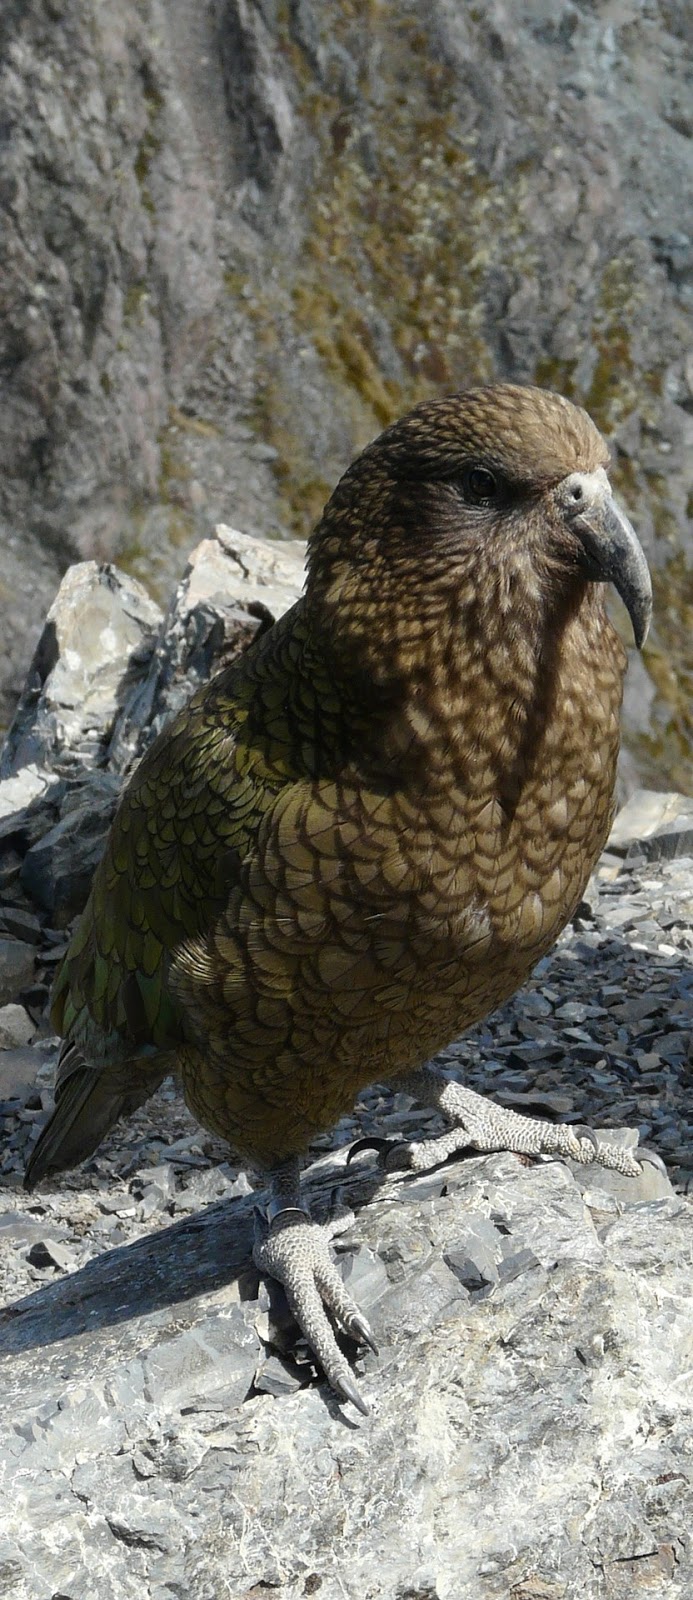 A kea parrot at a New Zealand mountain top.